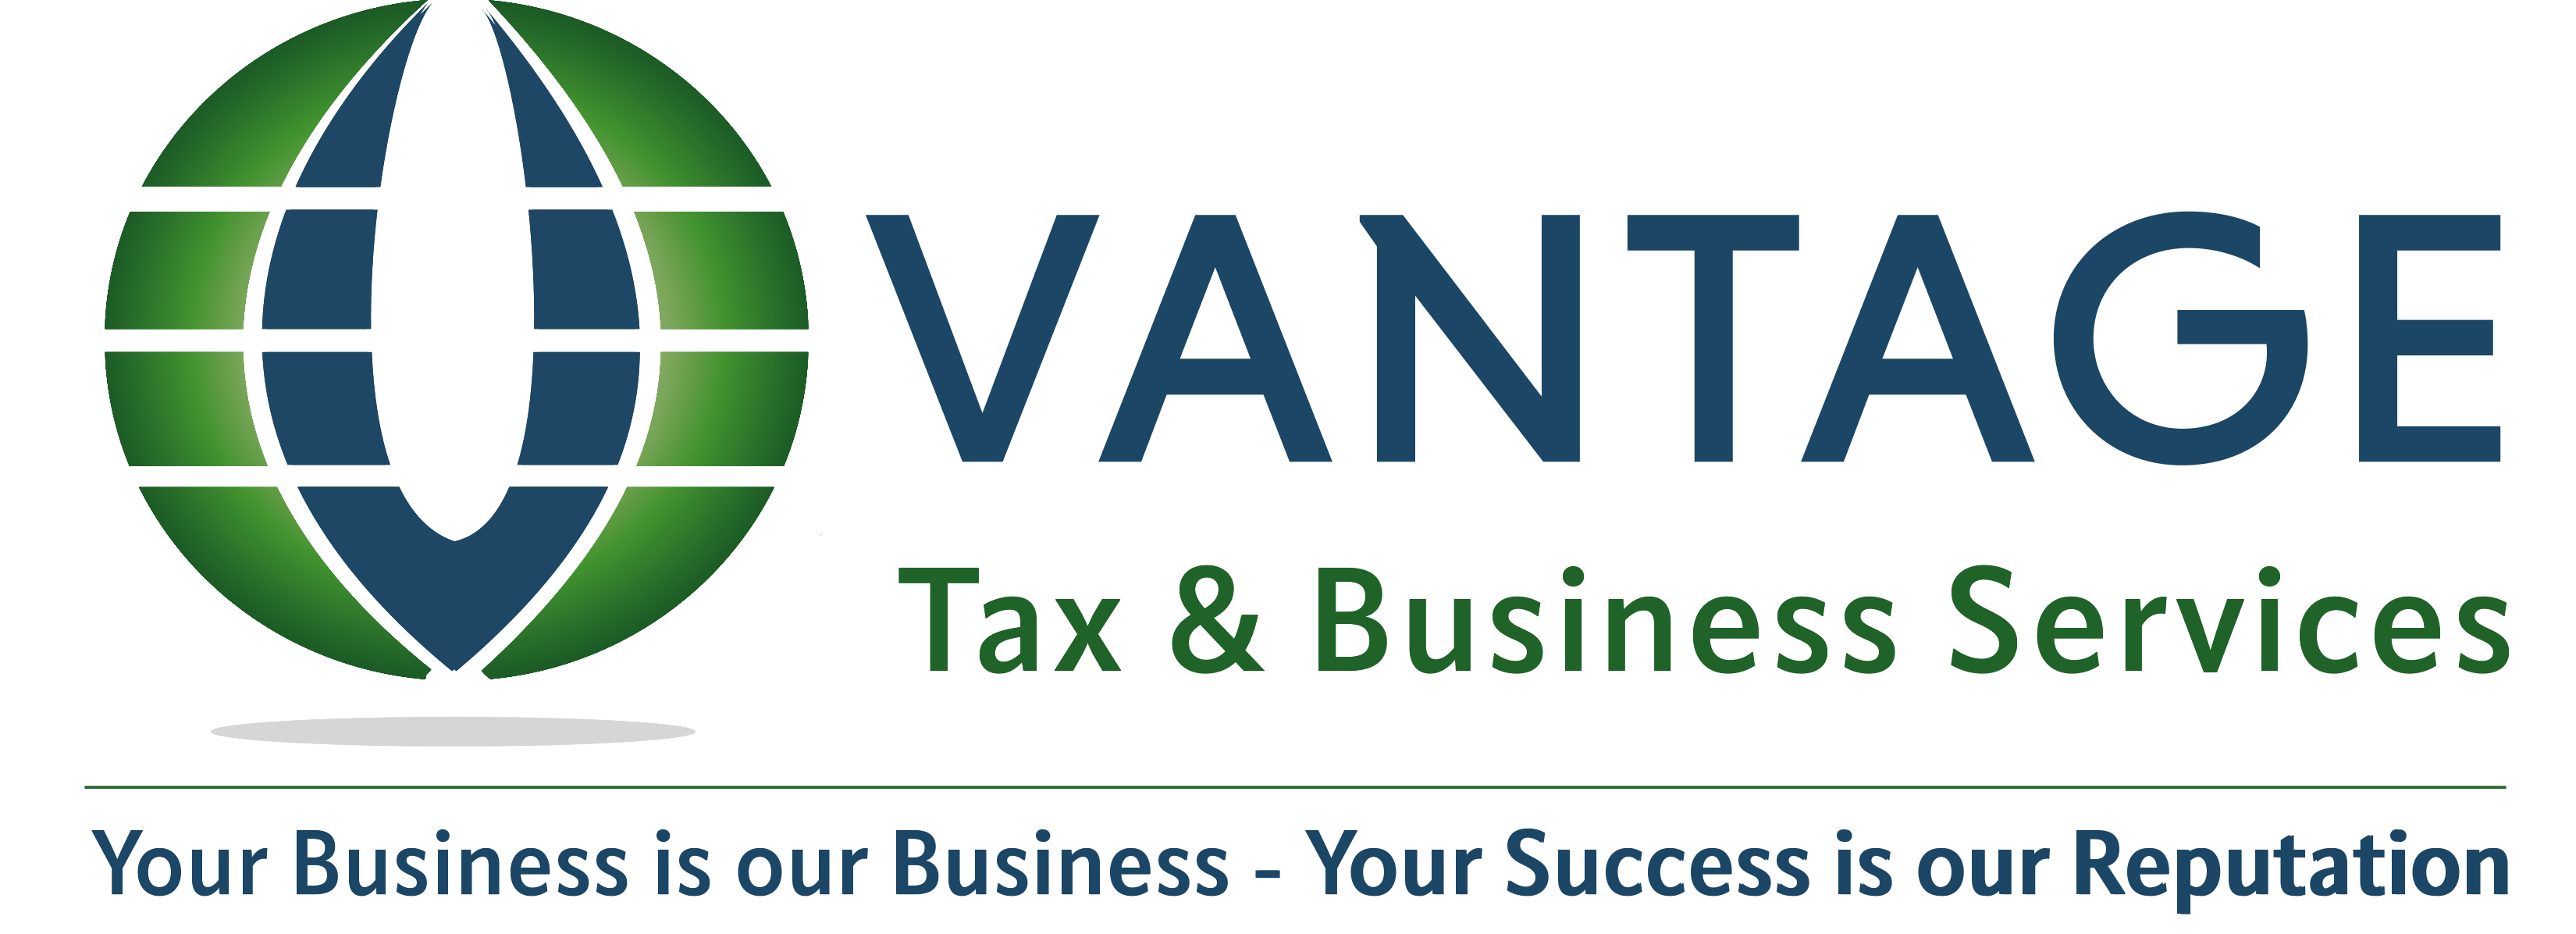 Vantage Tax & Business Services